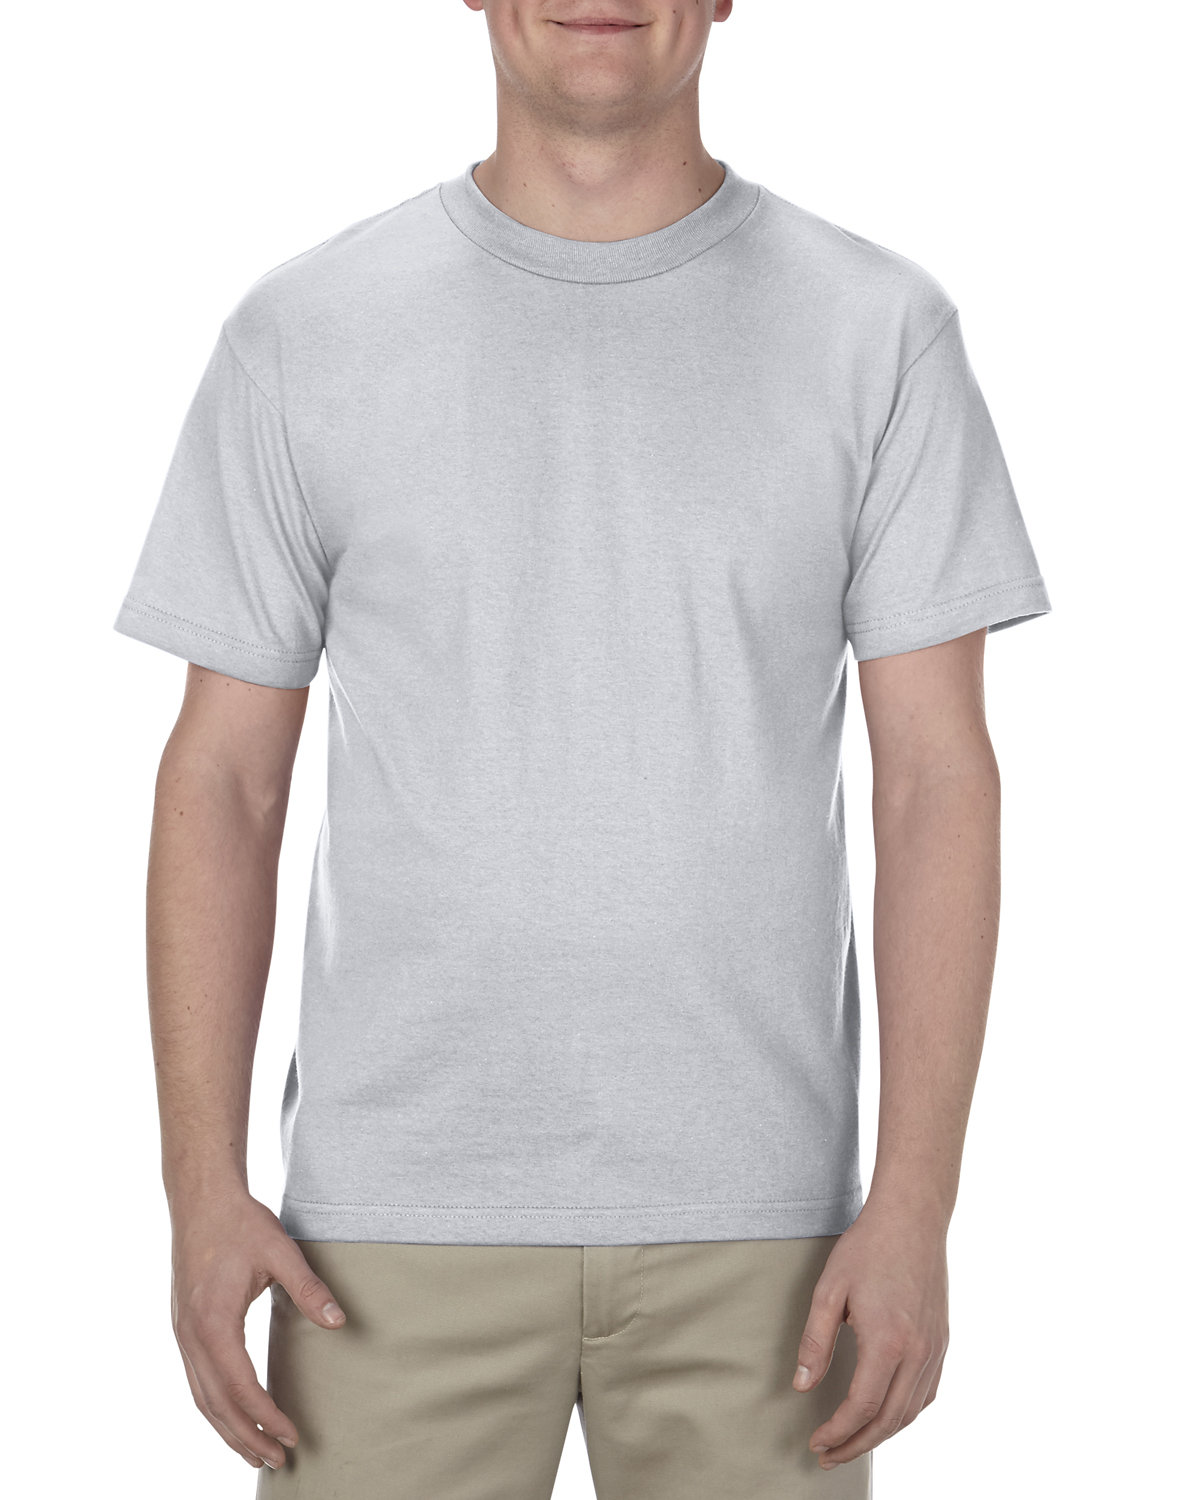 American Apparel Adult 6.0 oz., 100% Cotton T-Shirt SILVER 